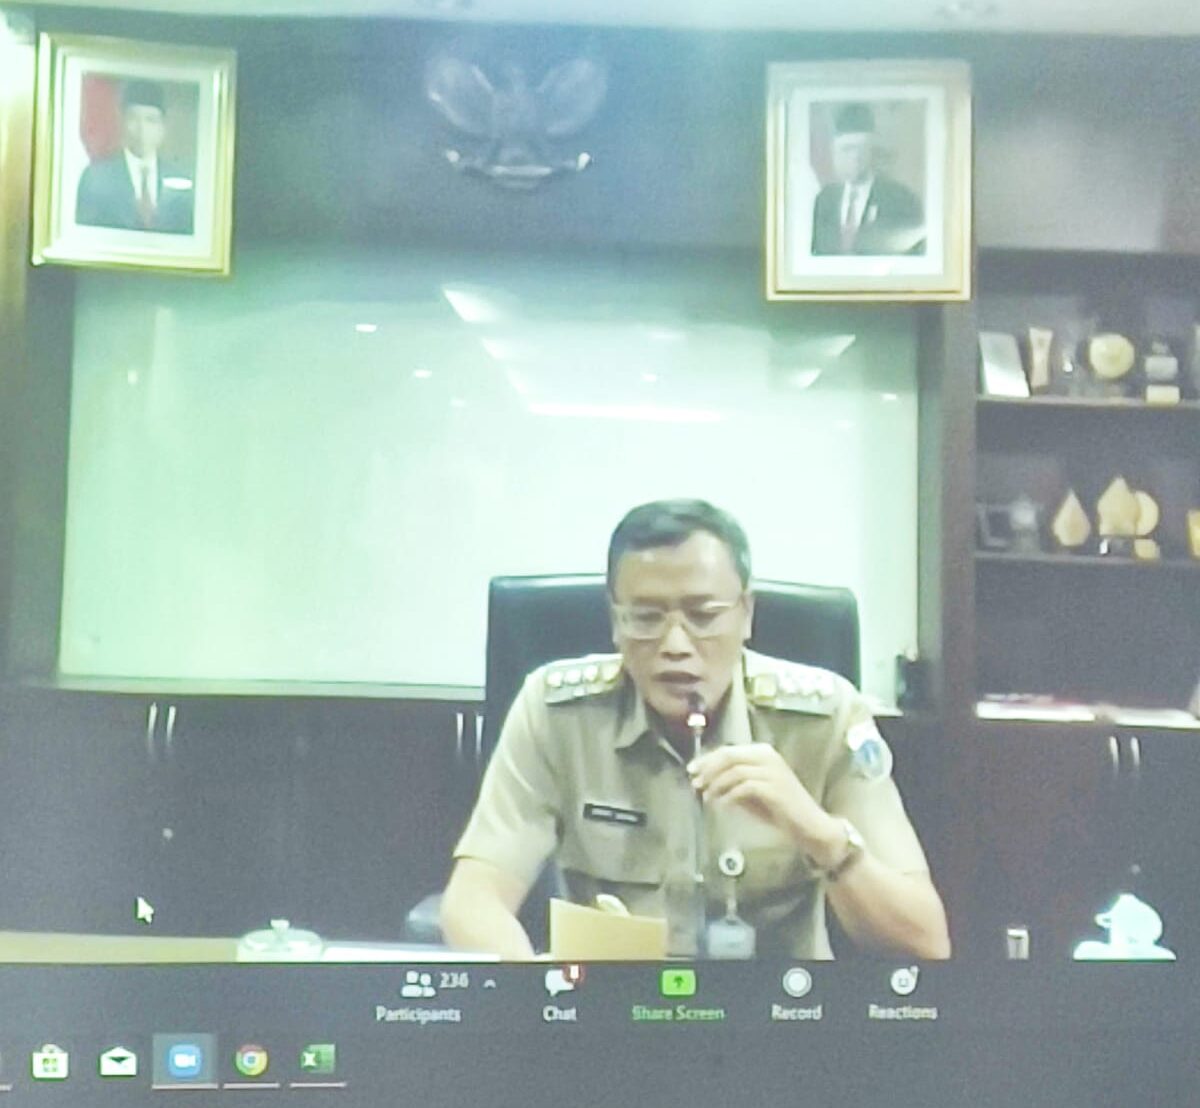 Walikota Jakarta Pusat Dhany Sukma pada Pembukaan Acara Sosialisasi Rembuk RW Sejakarta Pusat (foto: Sugeng P)